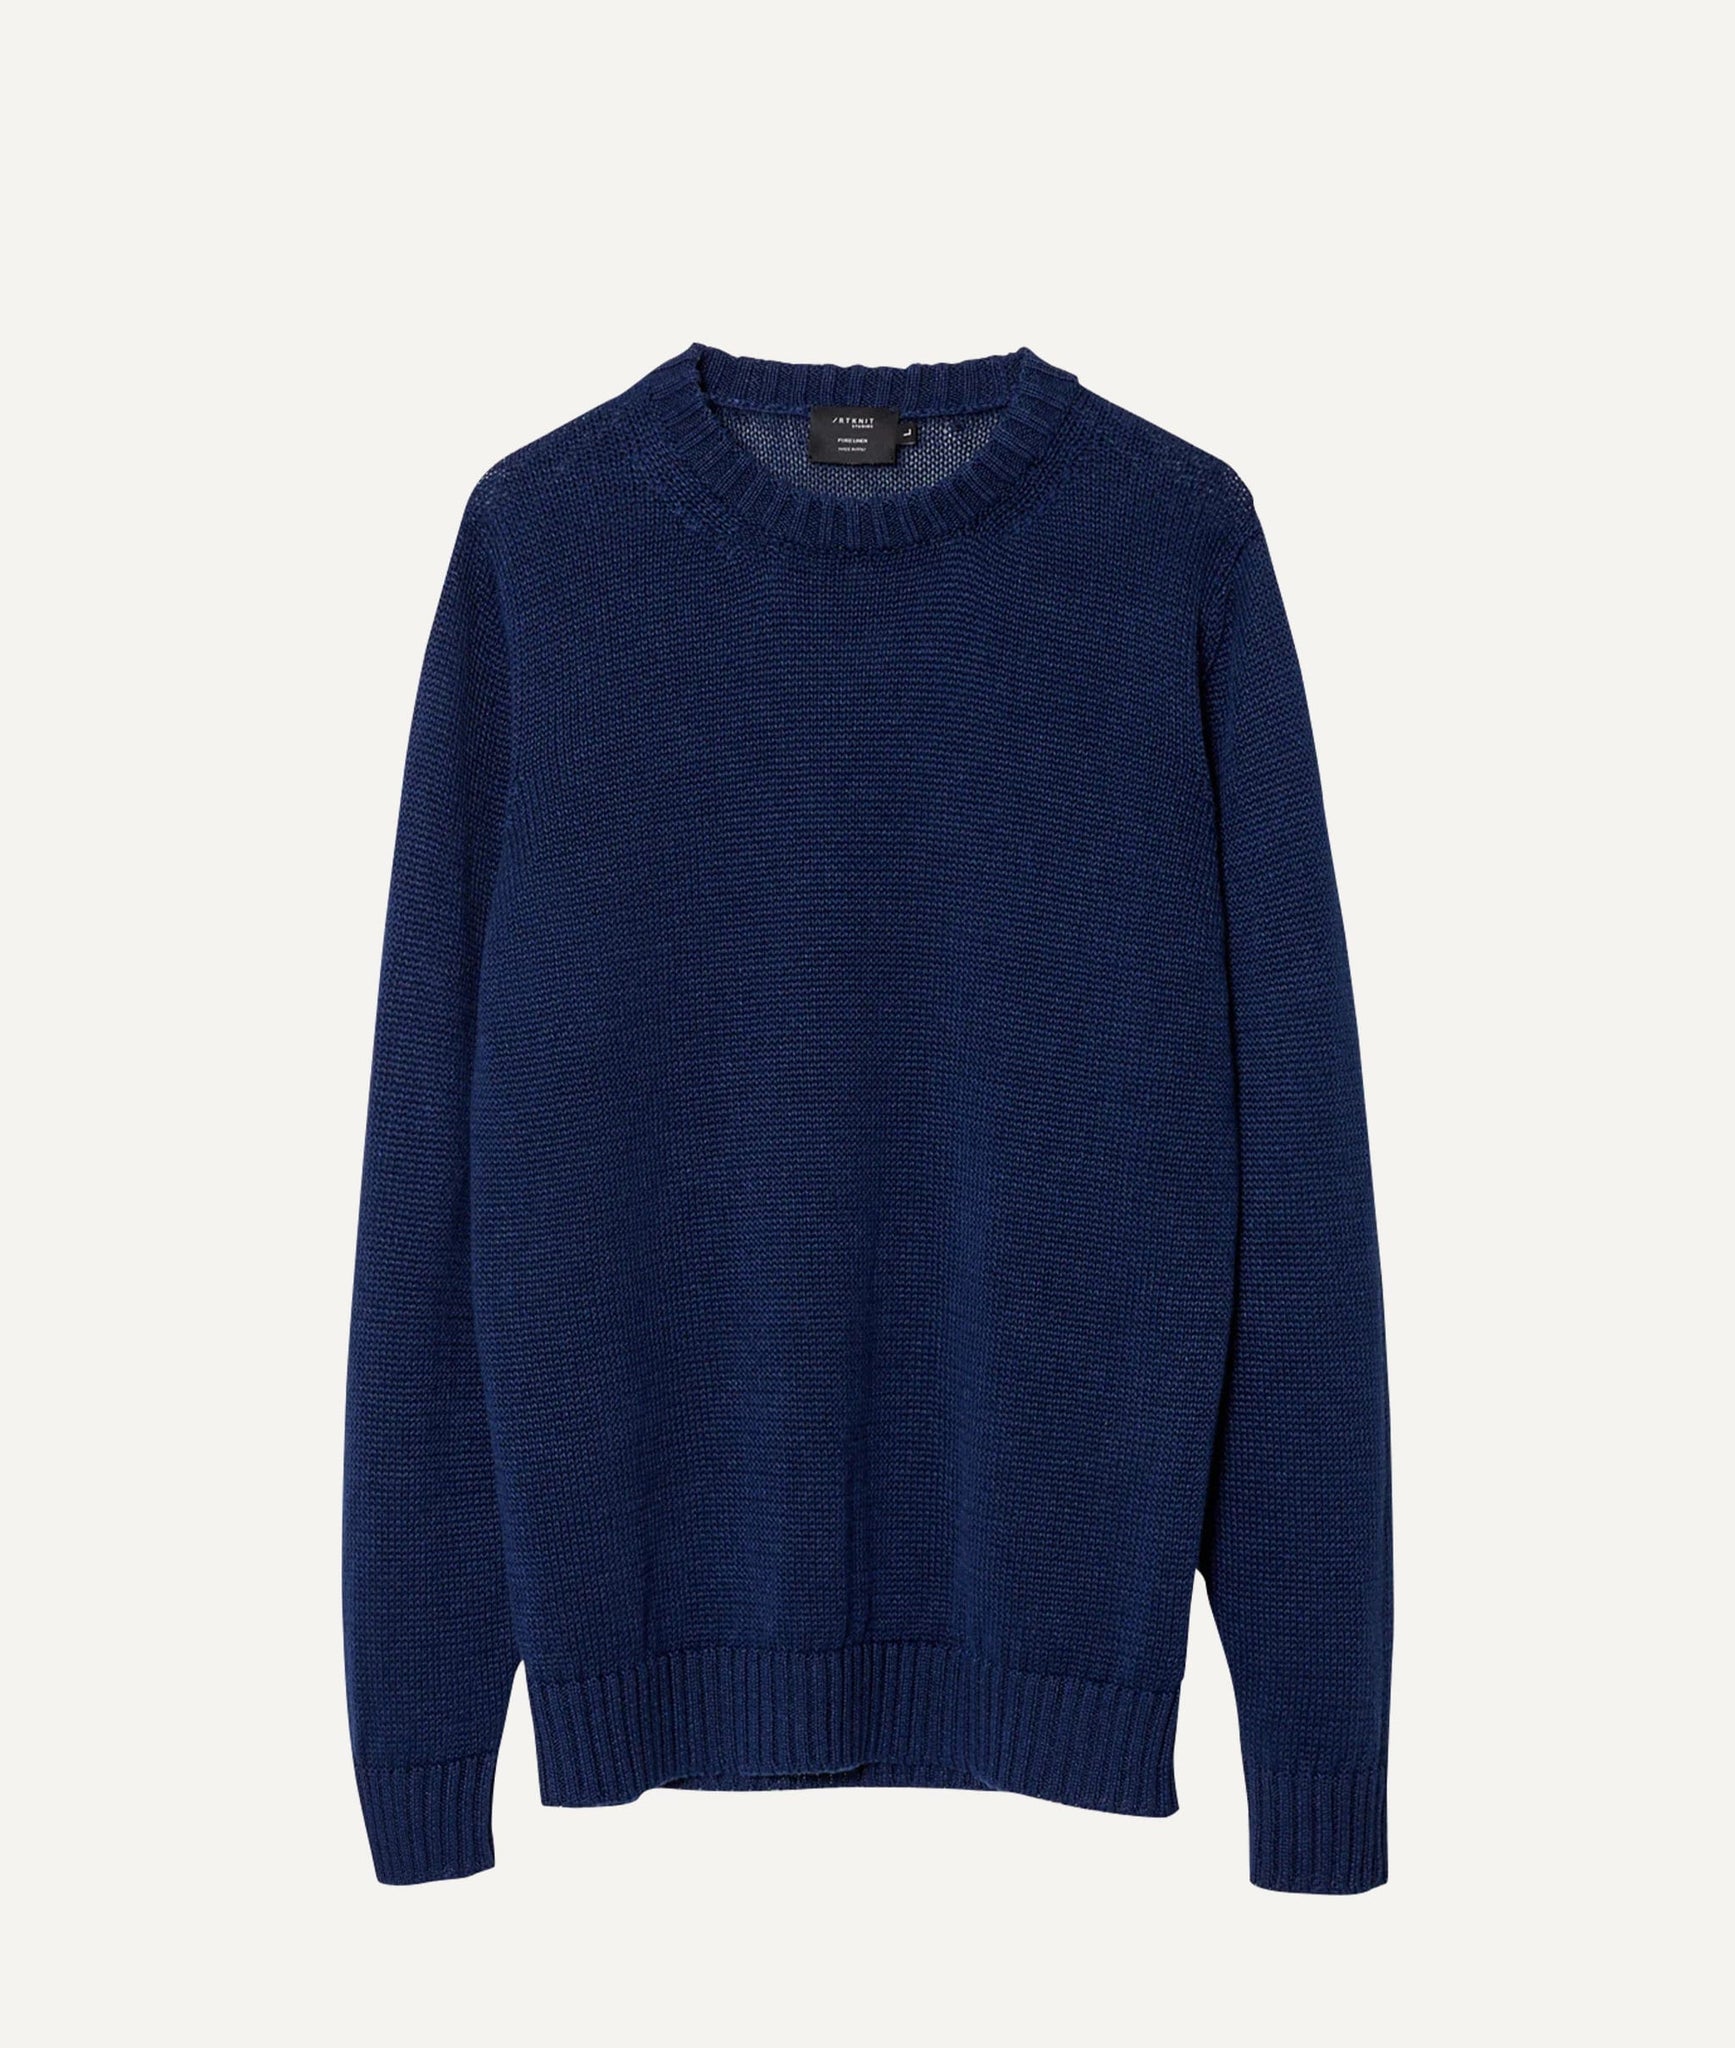 The Pure Linen Crewneck Sweater